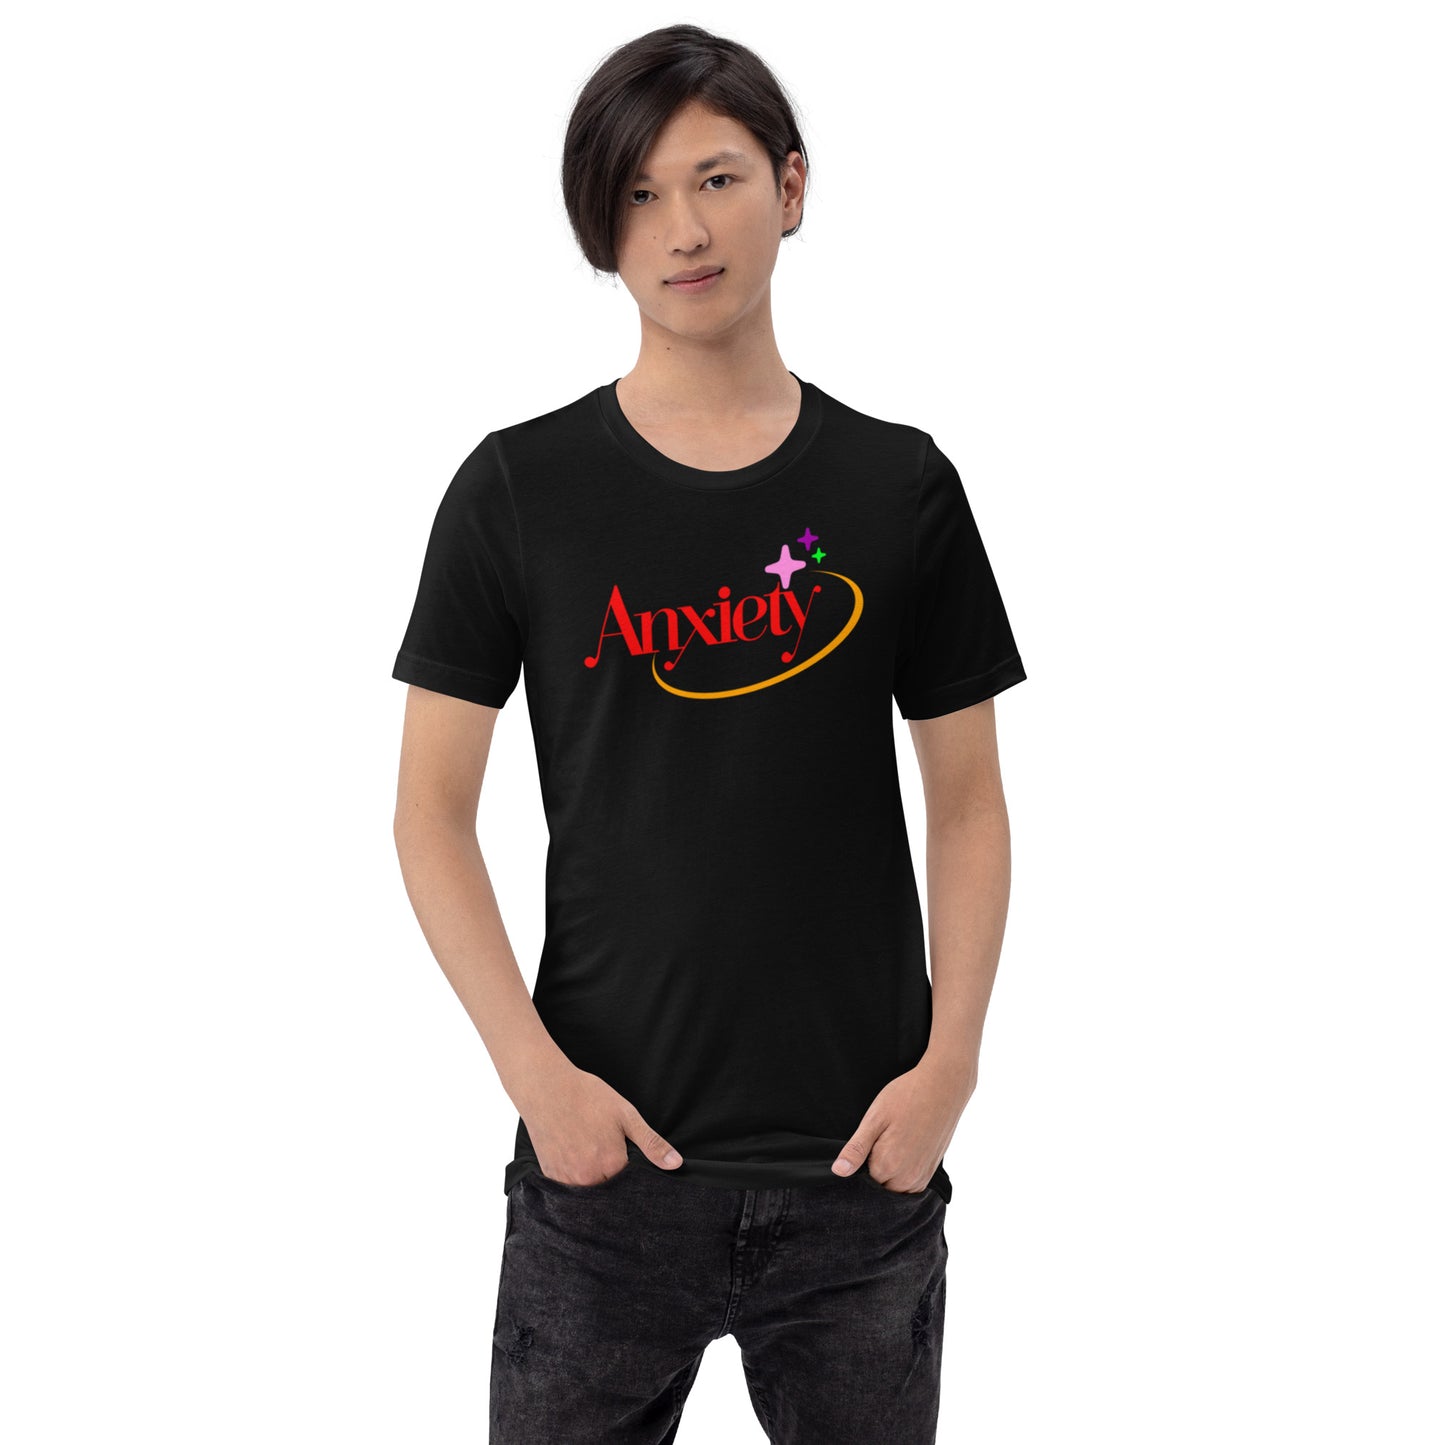 Anxiety Unisex t-shirt